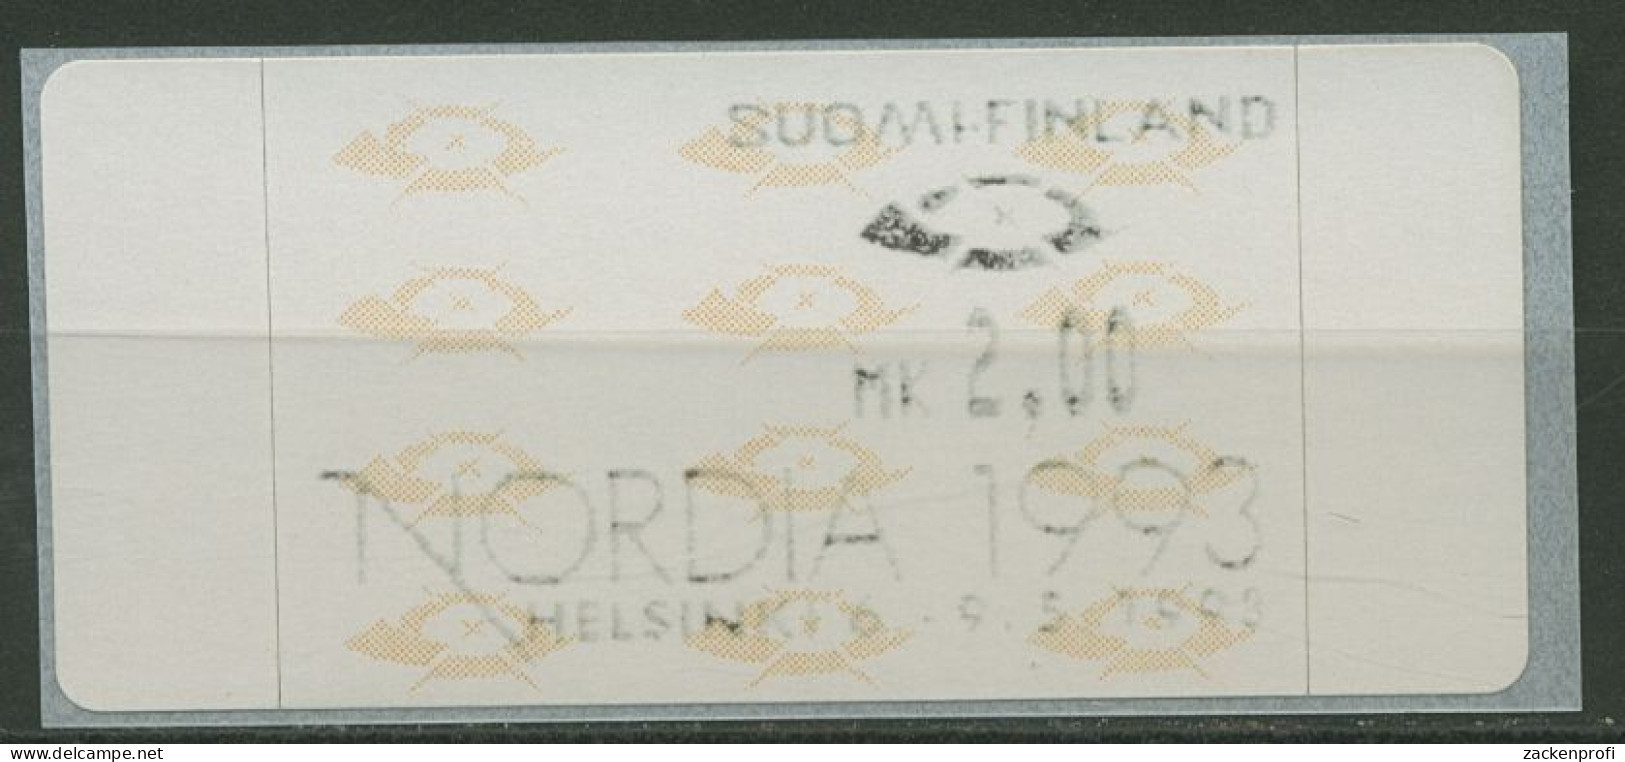 Finnland ATM 1993 Posthörner Einzelwert ATM 12.5 Z1 Postfrisch - Viñetas De Franqueo [ATM]